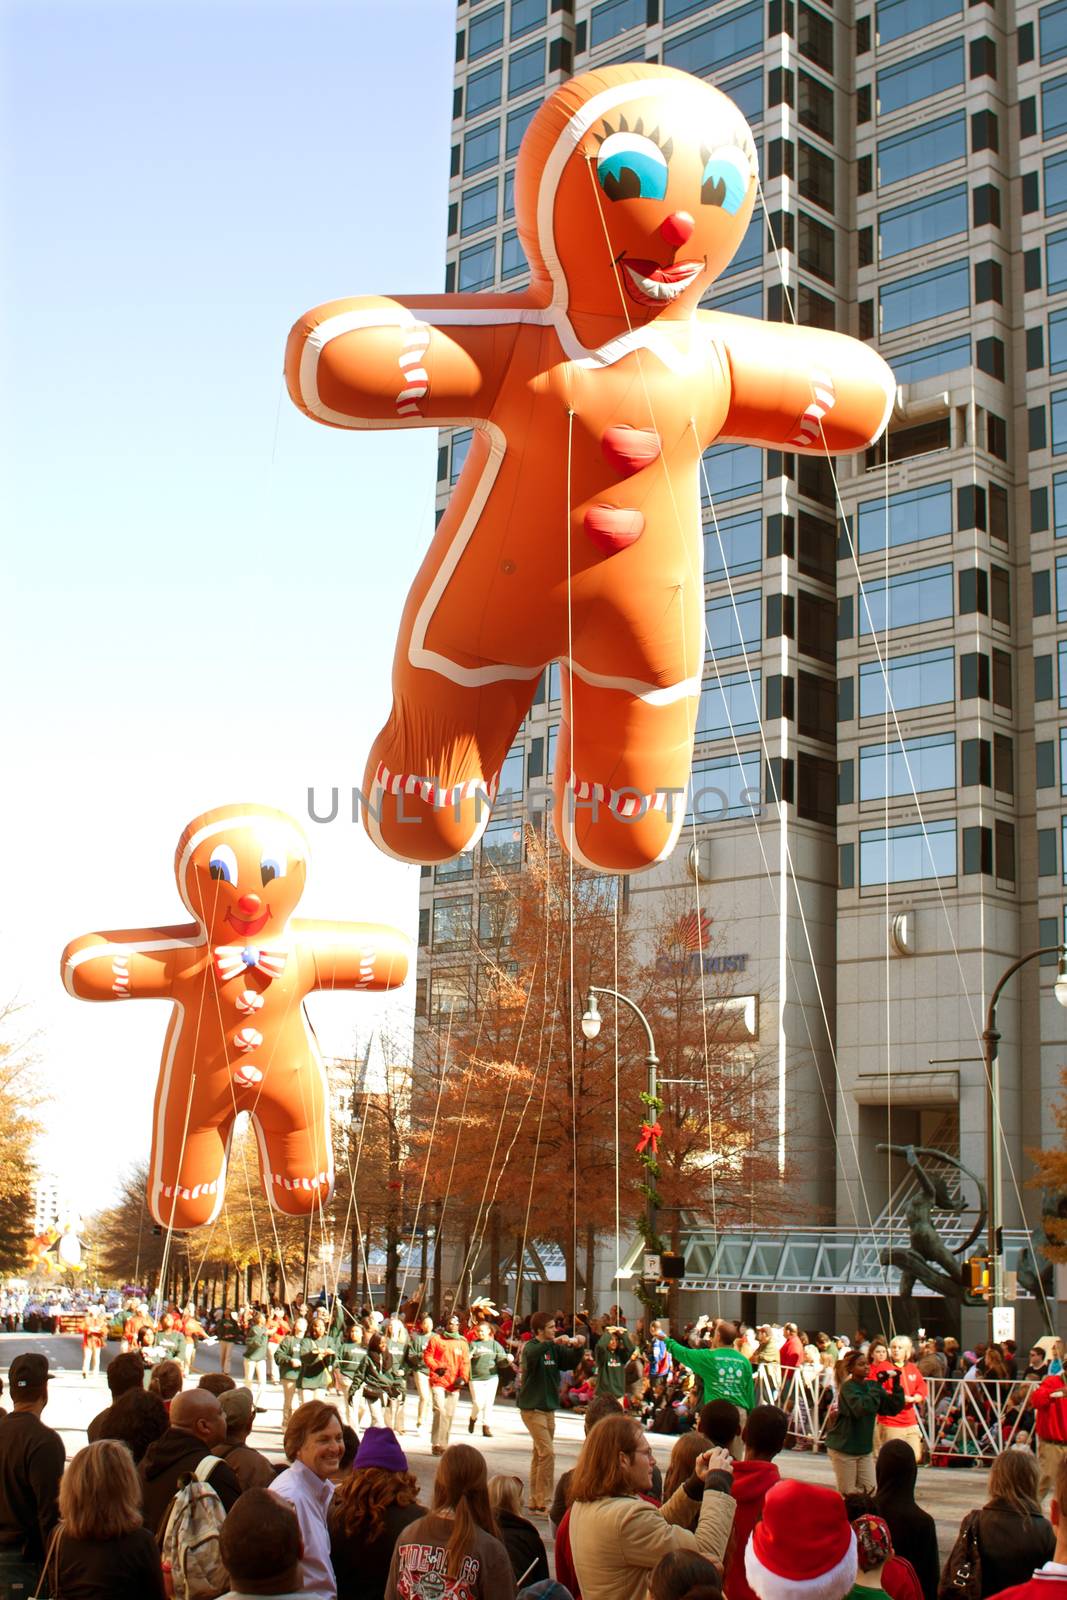 Atlanta, GA, USA - December 1, 2012:  Two inflated gingerbread man balloons move through the parade route at the annual Atlanta Christmas parade in downtown Atlanta.